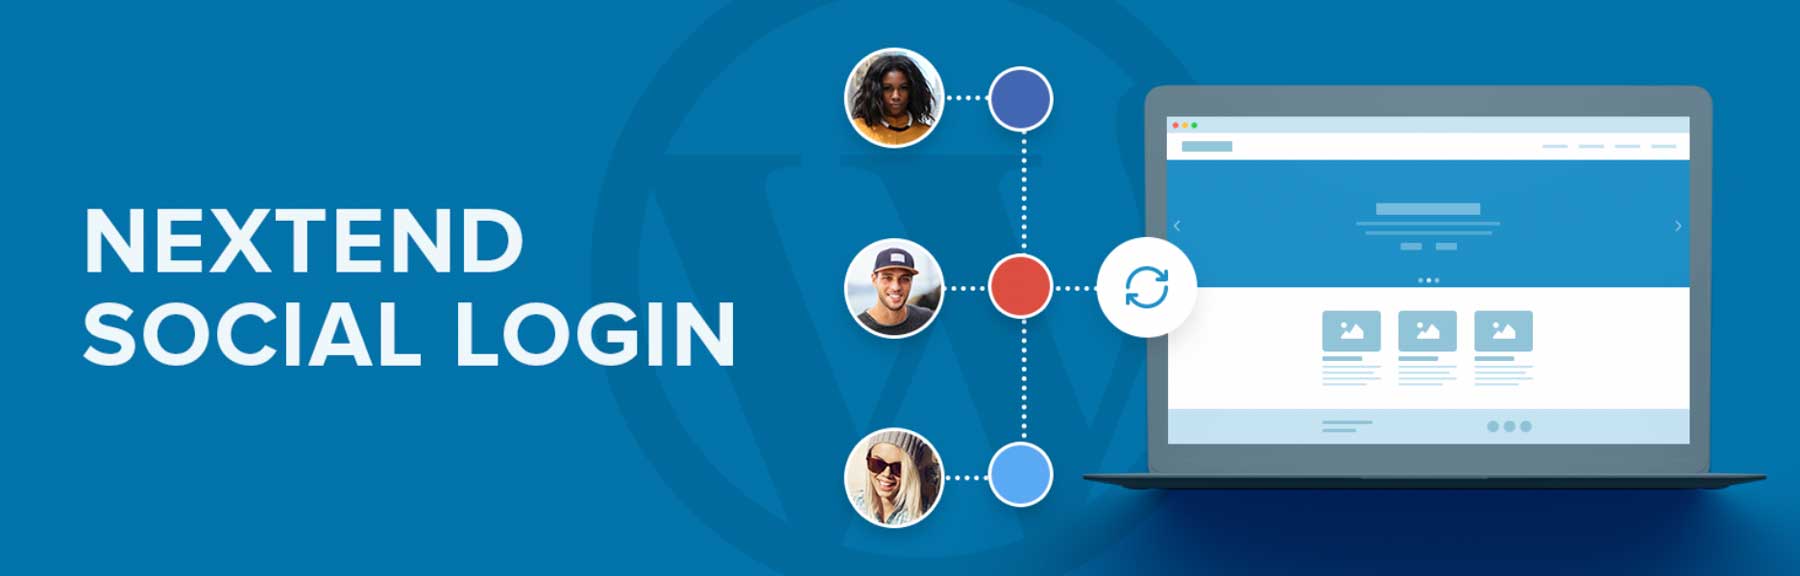 The Nextend Social Login and Register Facebook plugin for WordPress